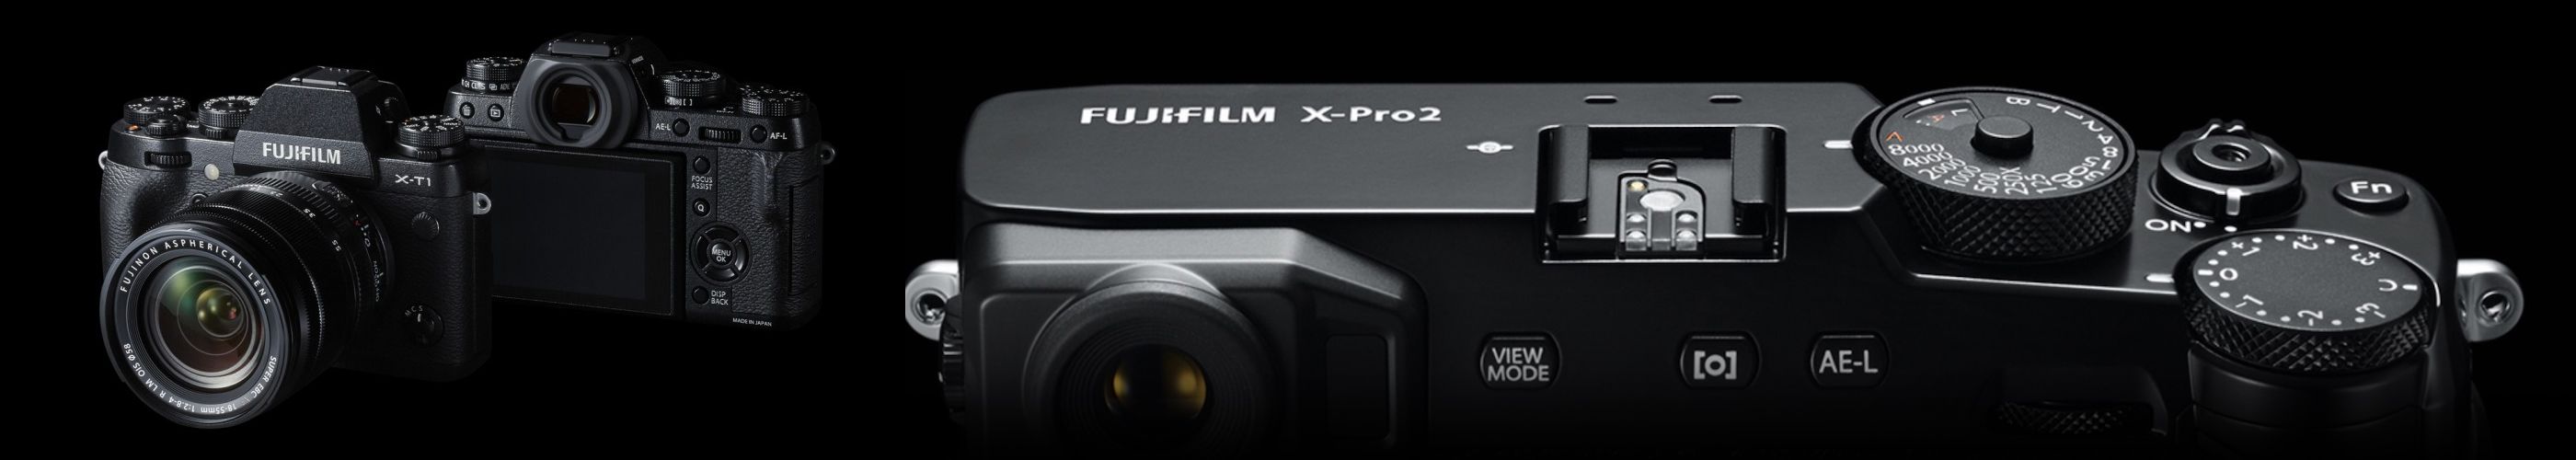 fujifilm-camera-repairs-fast-professional-fixation